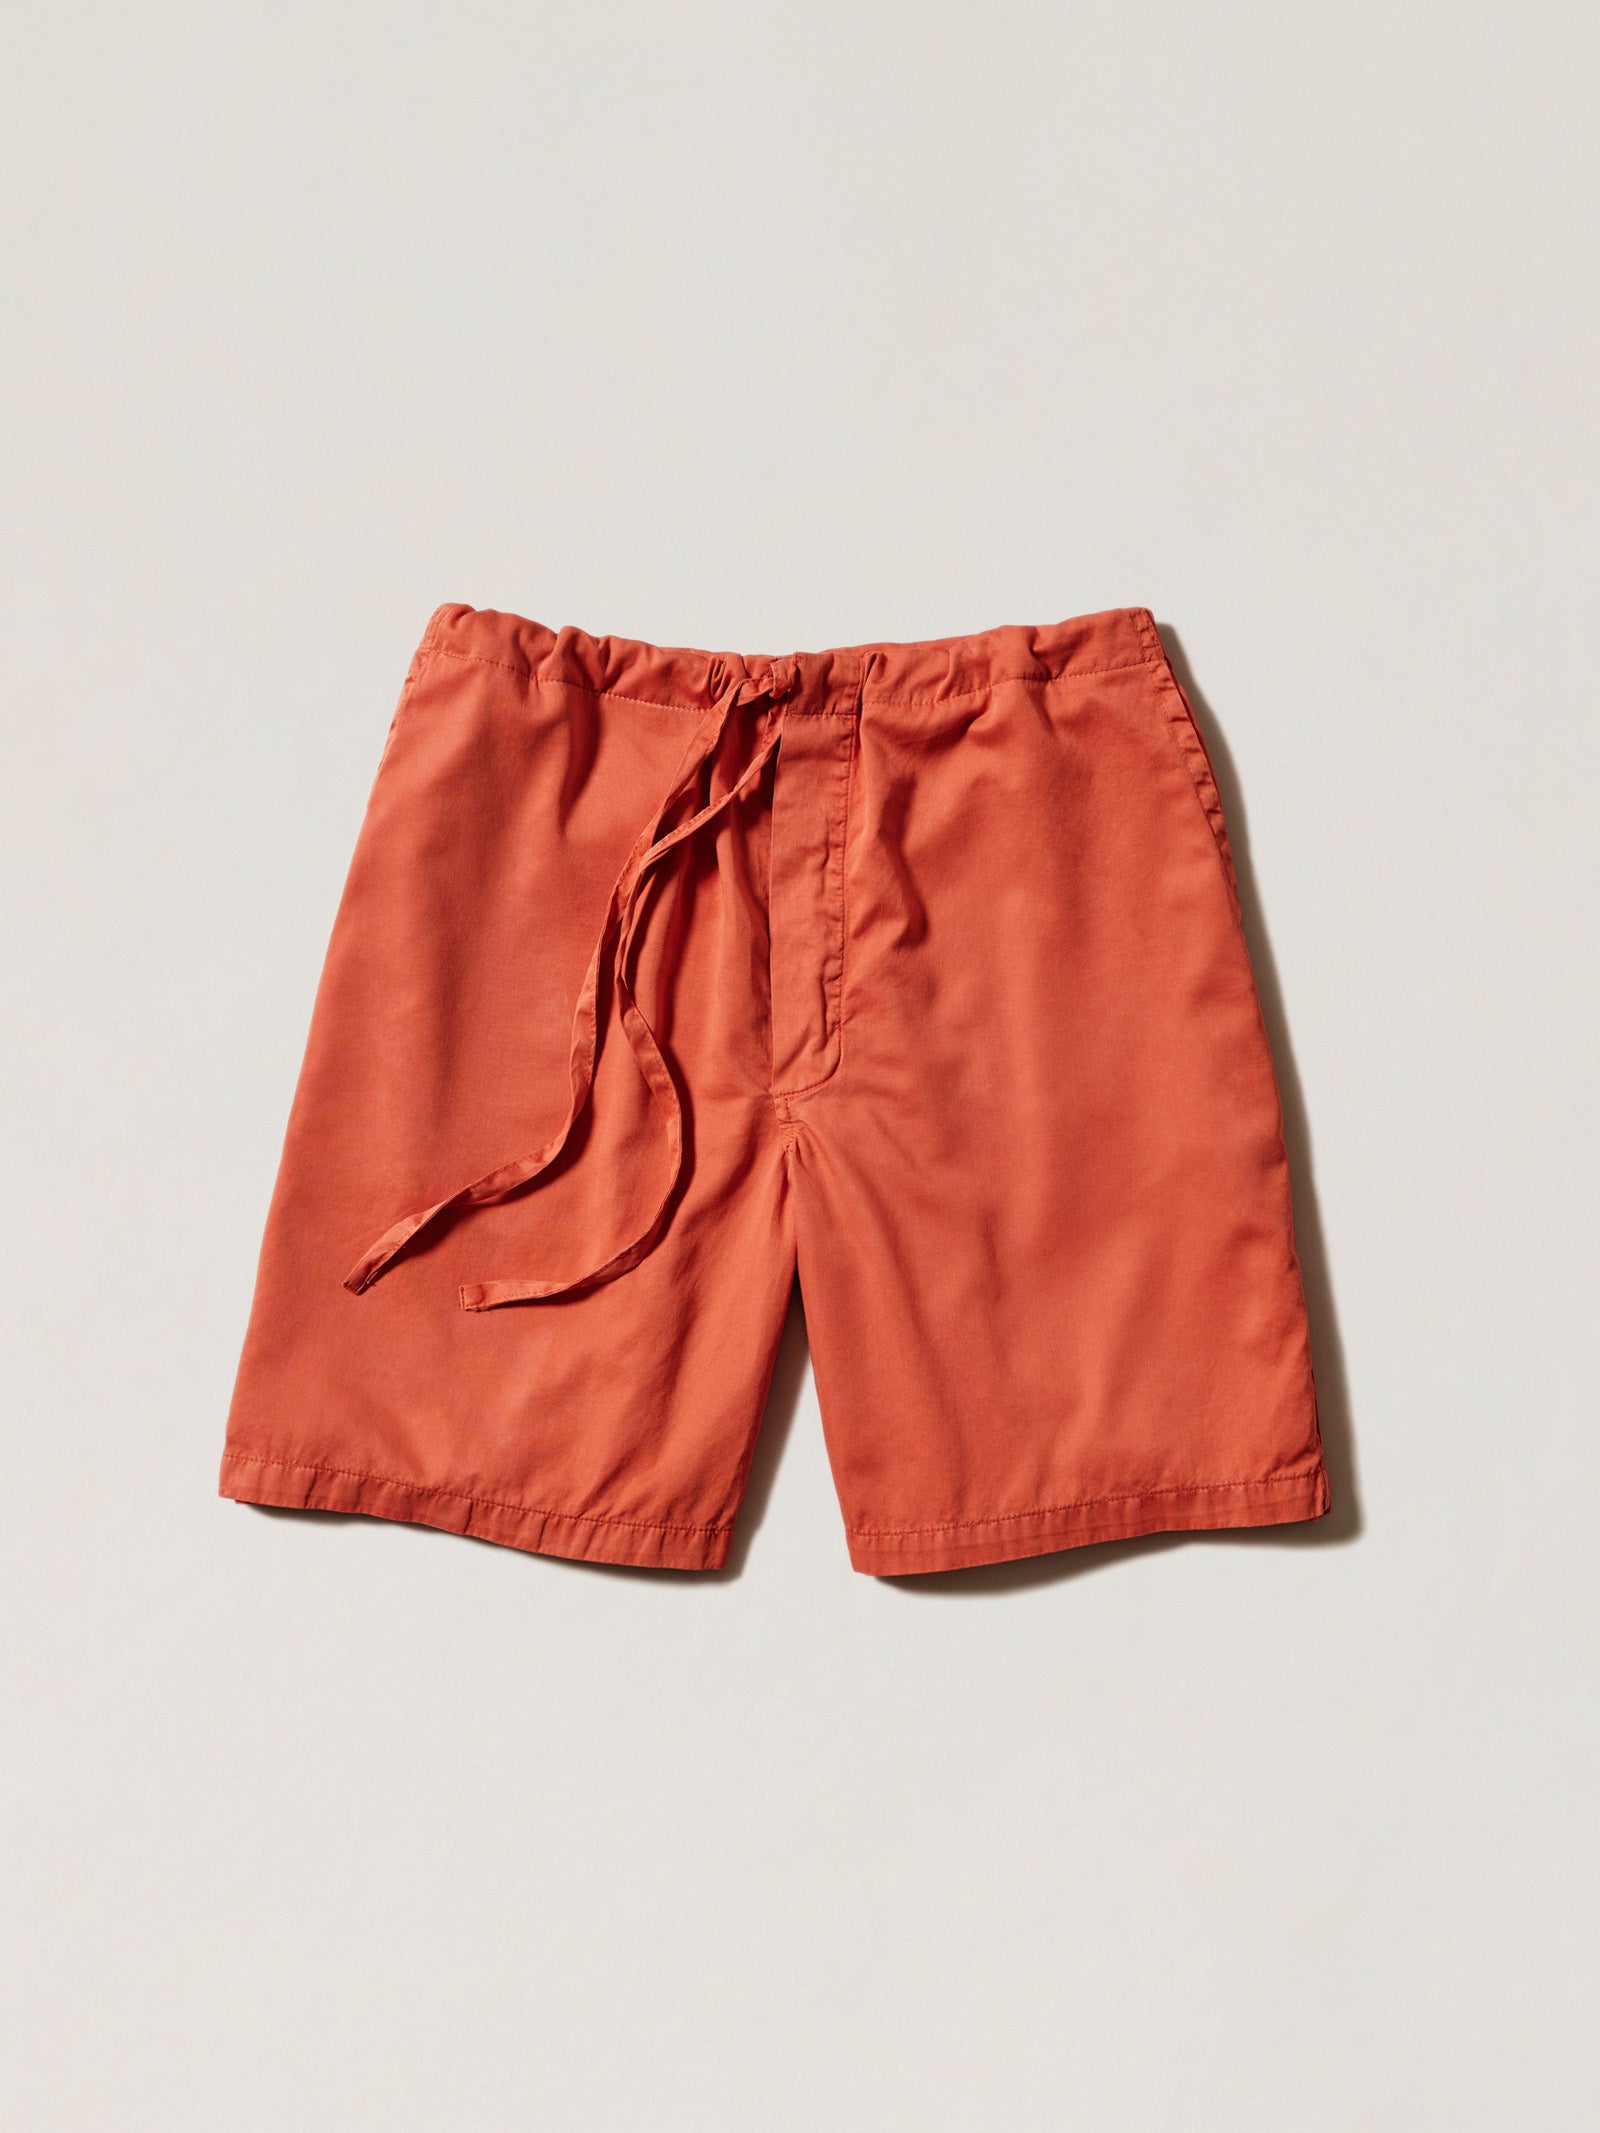 100% cotton pyjama shorts, red drawstring waist lounge shorts